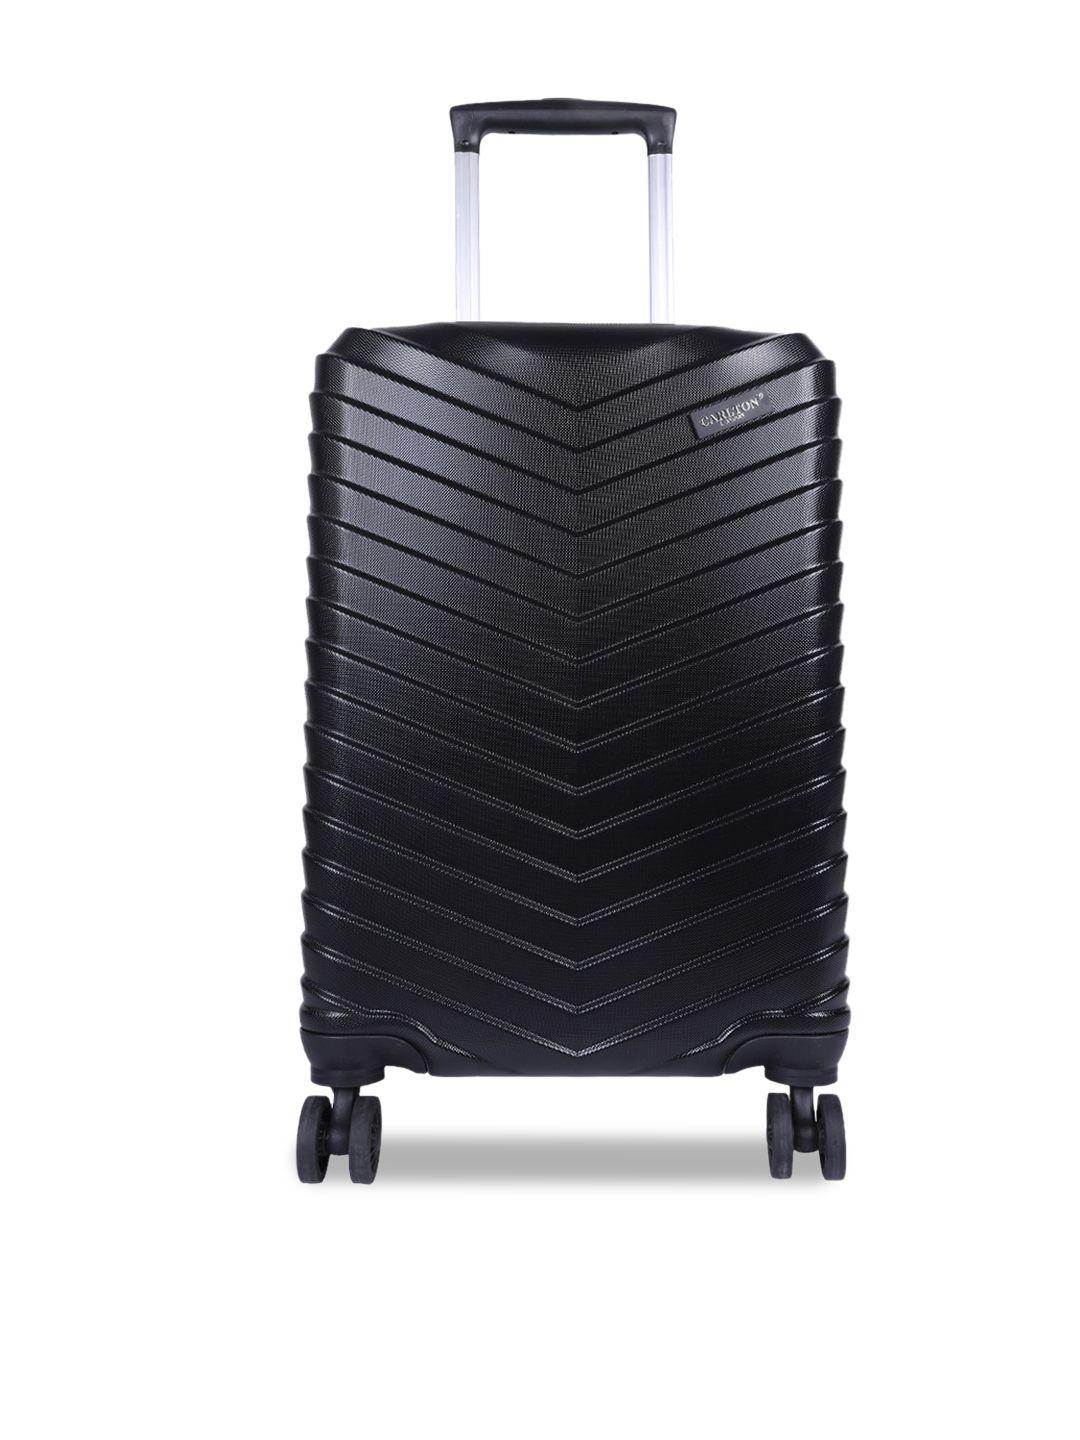 carlton-london-textured-360-degree-rotation-cabin-trolley-bag